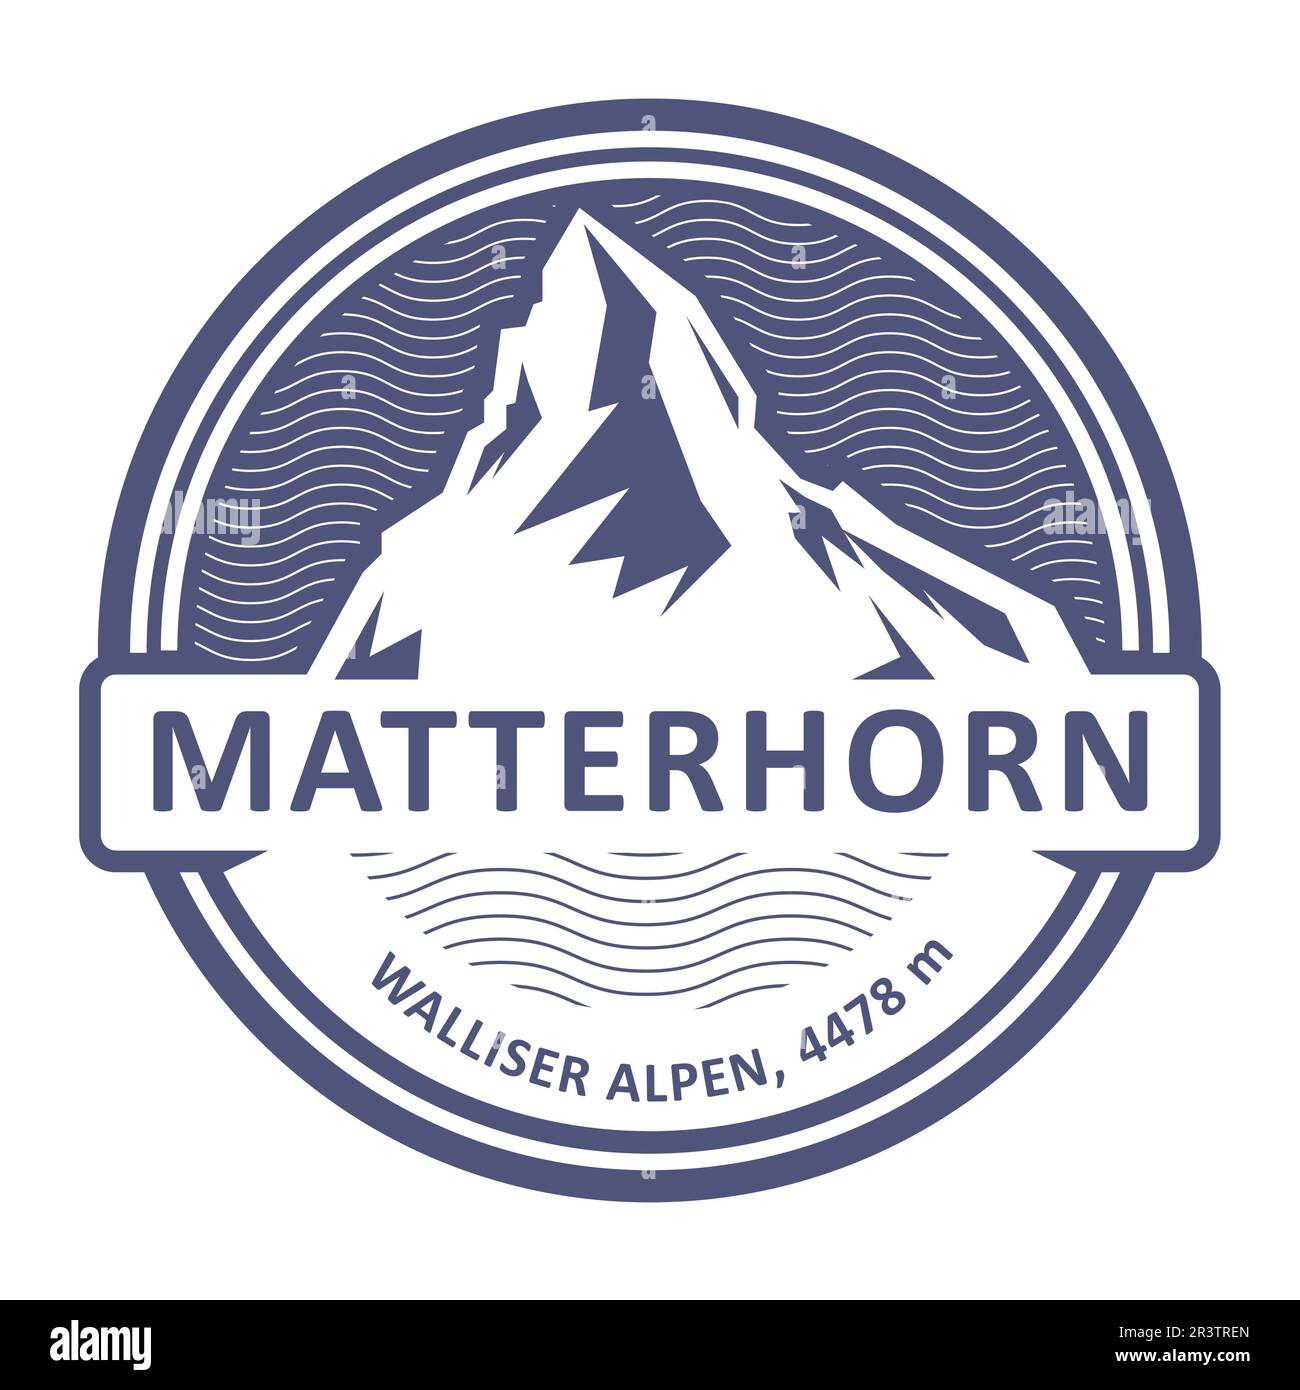 Emblem mit Stempel des Matterhorns, Monte Cervino Gipfel, Berg der Pennine Alps, Vektor Stock Vektor